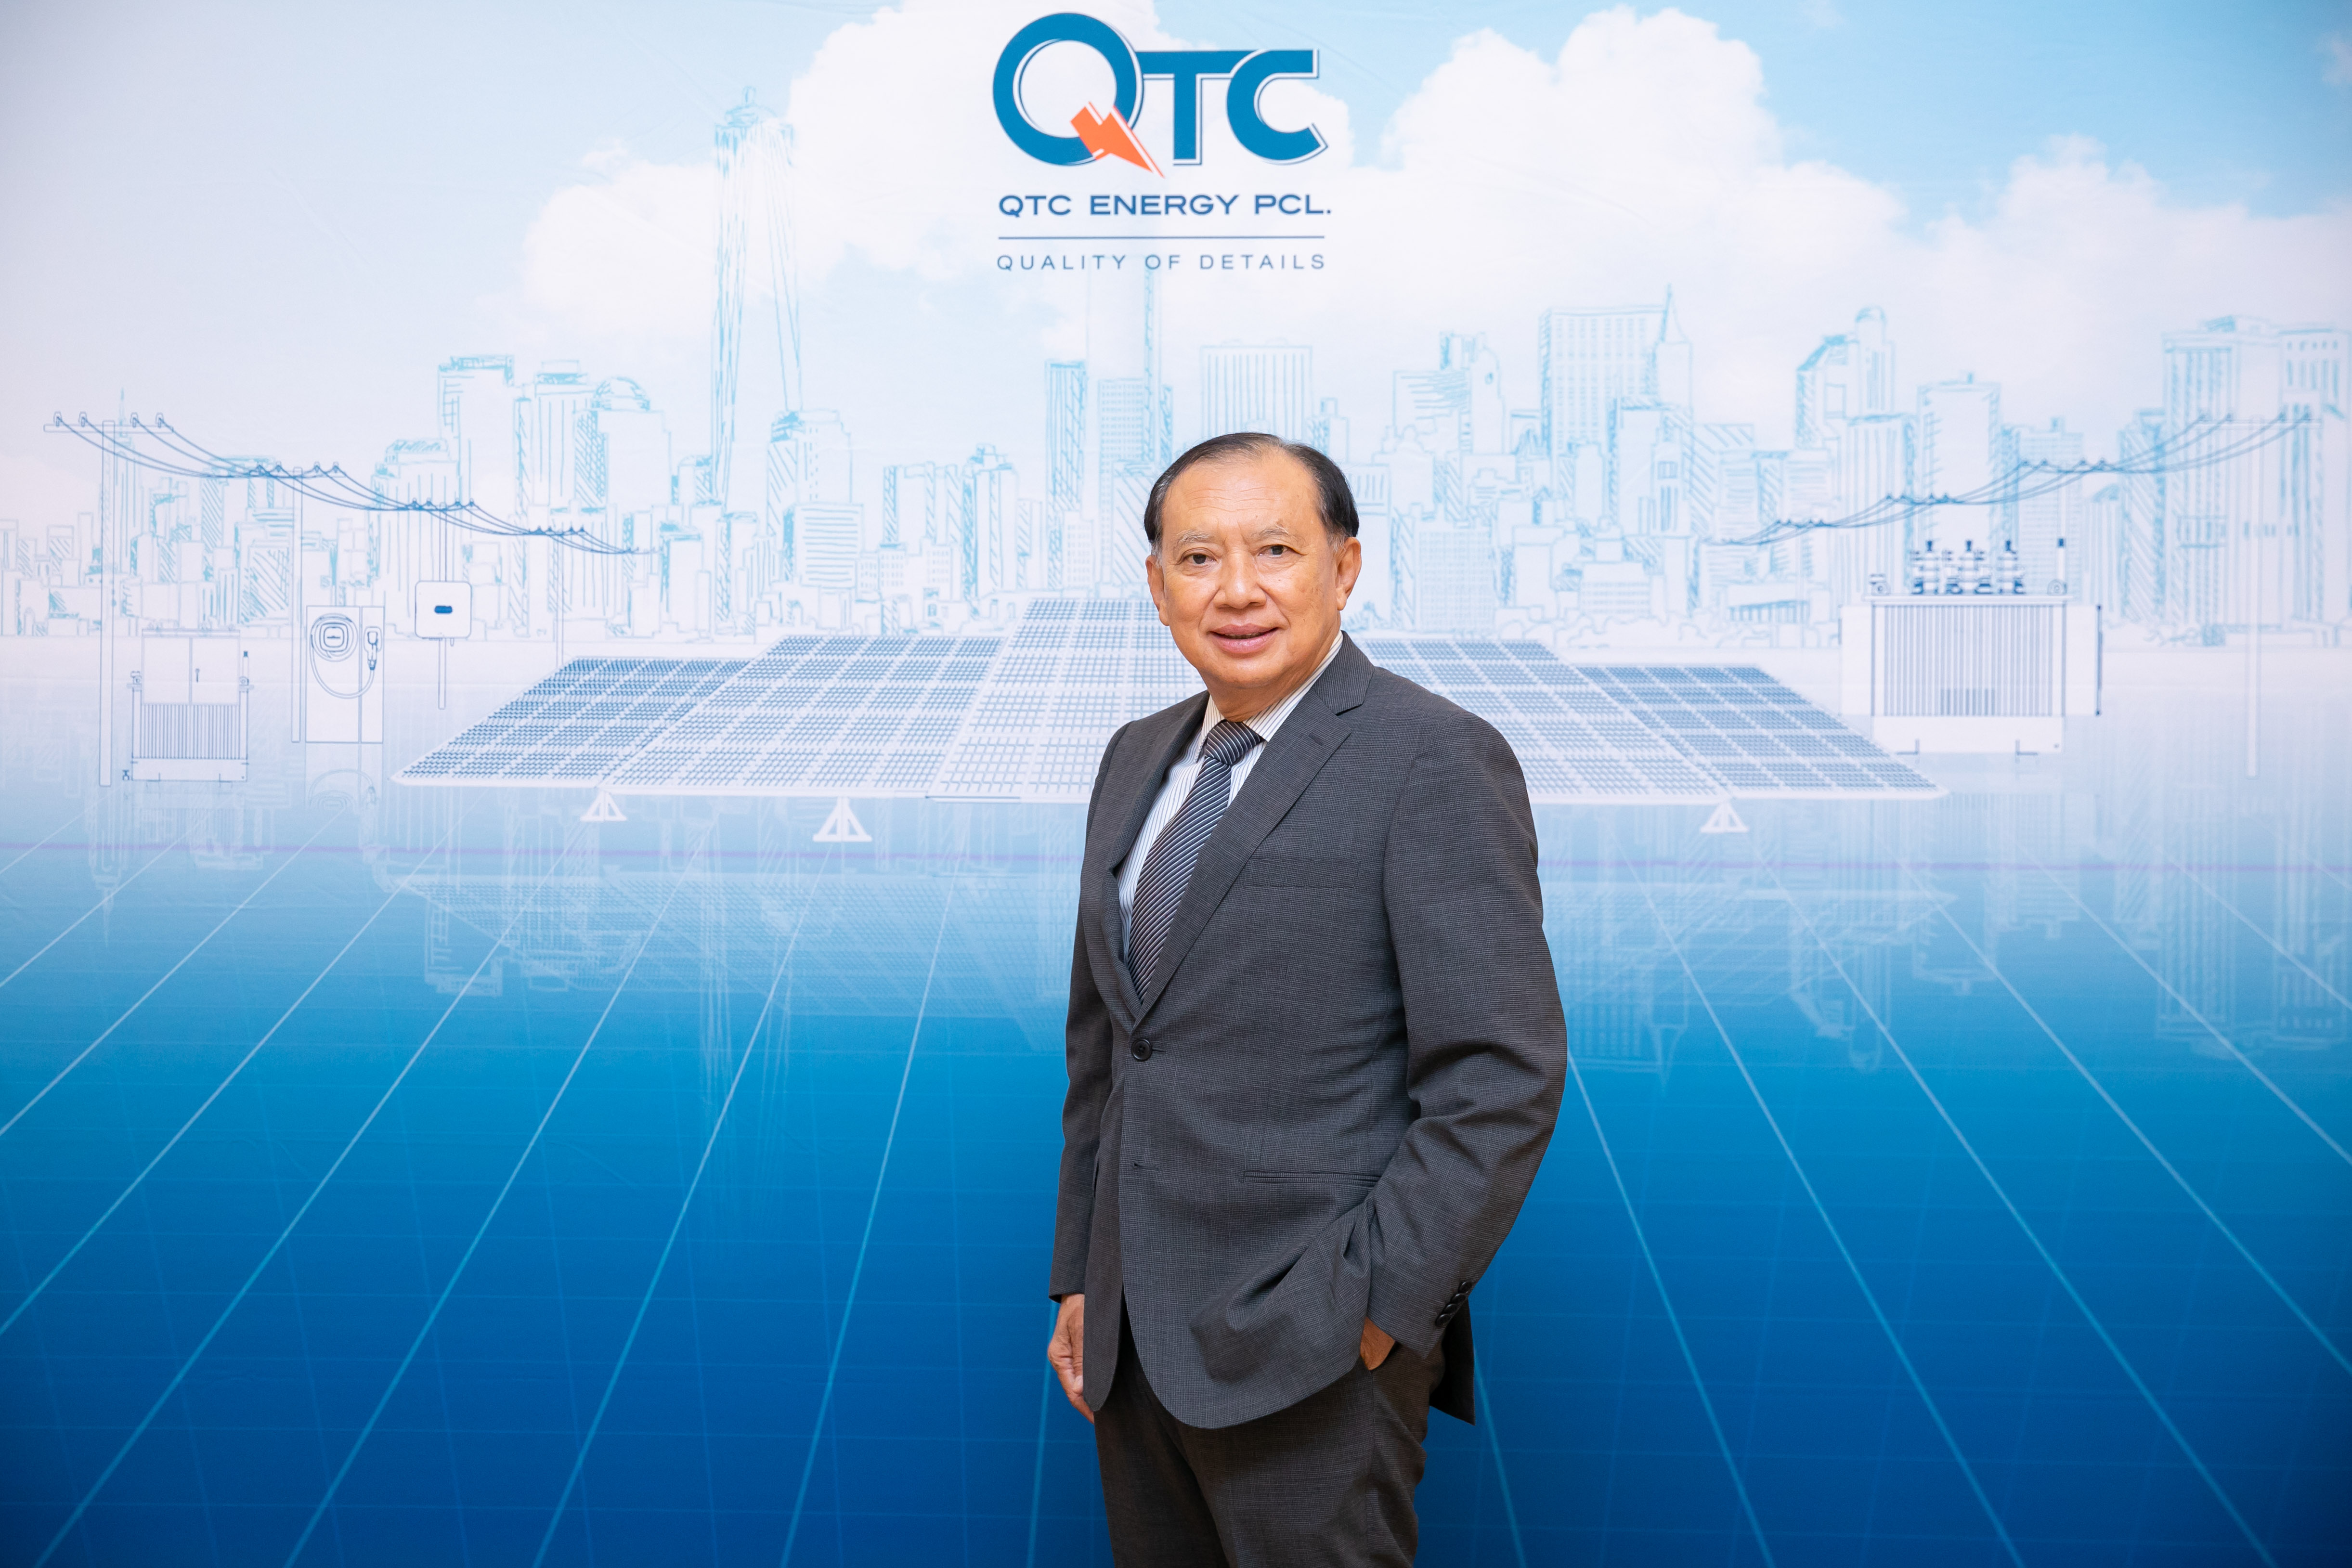 QTC เดินเกมรุก จับเทรนด์ขยายการลงทุนหม้อแปลงฯ  เจาะกลุ่มโรงไฟฟ้าพลังงานทดแทน – โรงงานอุตสาหกรรม 